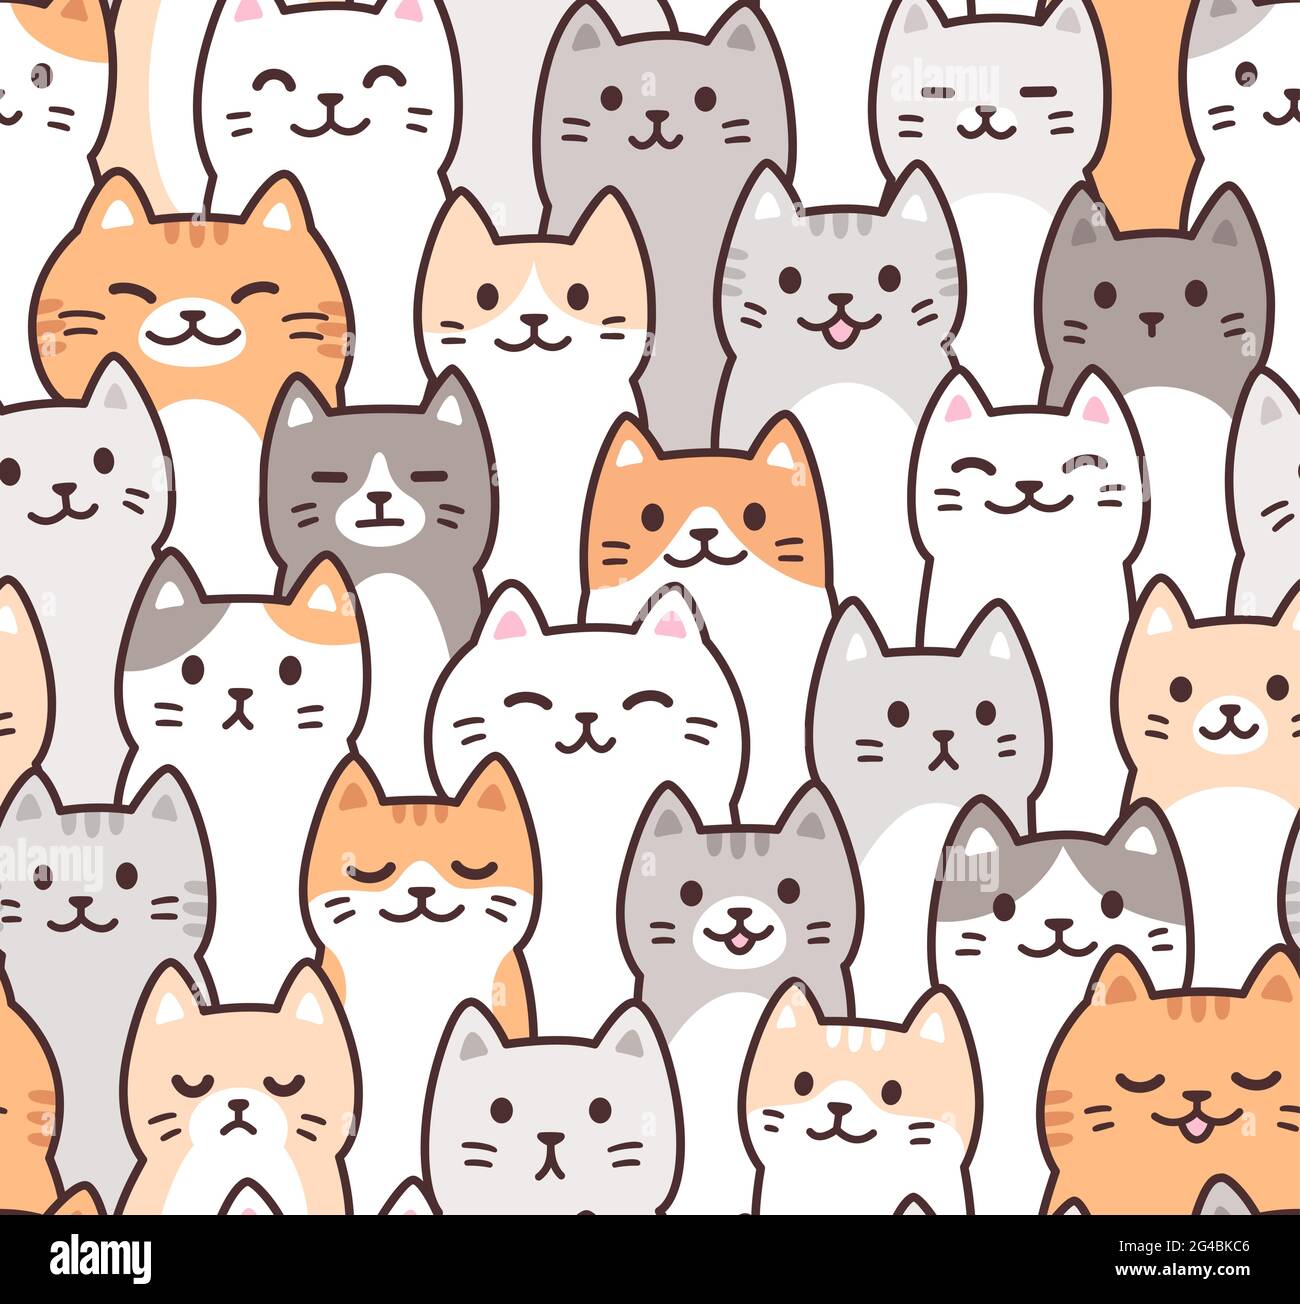 Cat cartoon vector icon, cute and kawaii cats vector illustrations